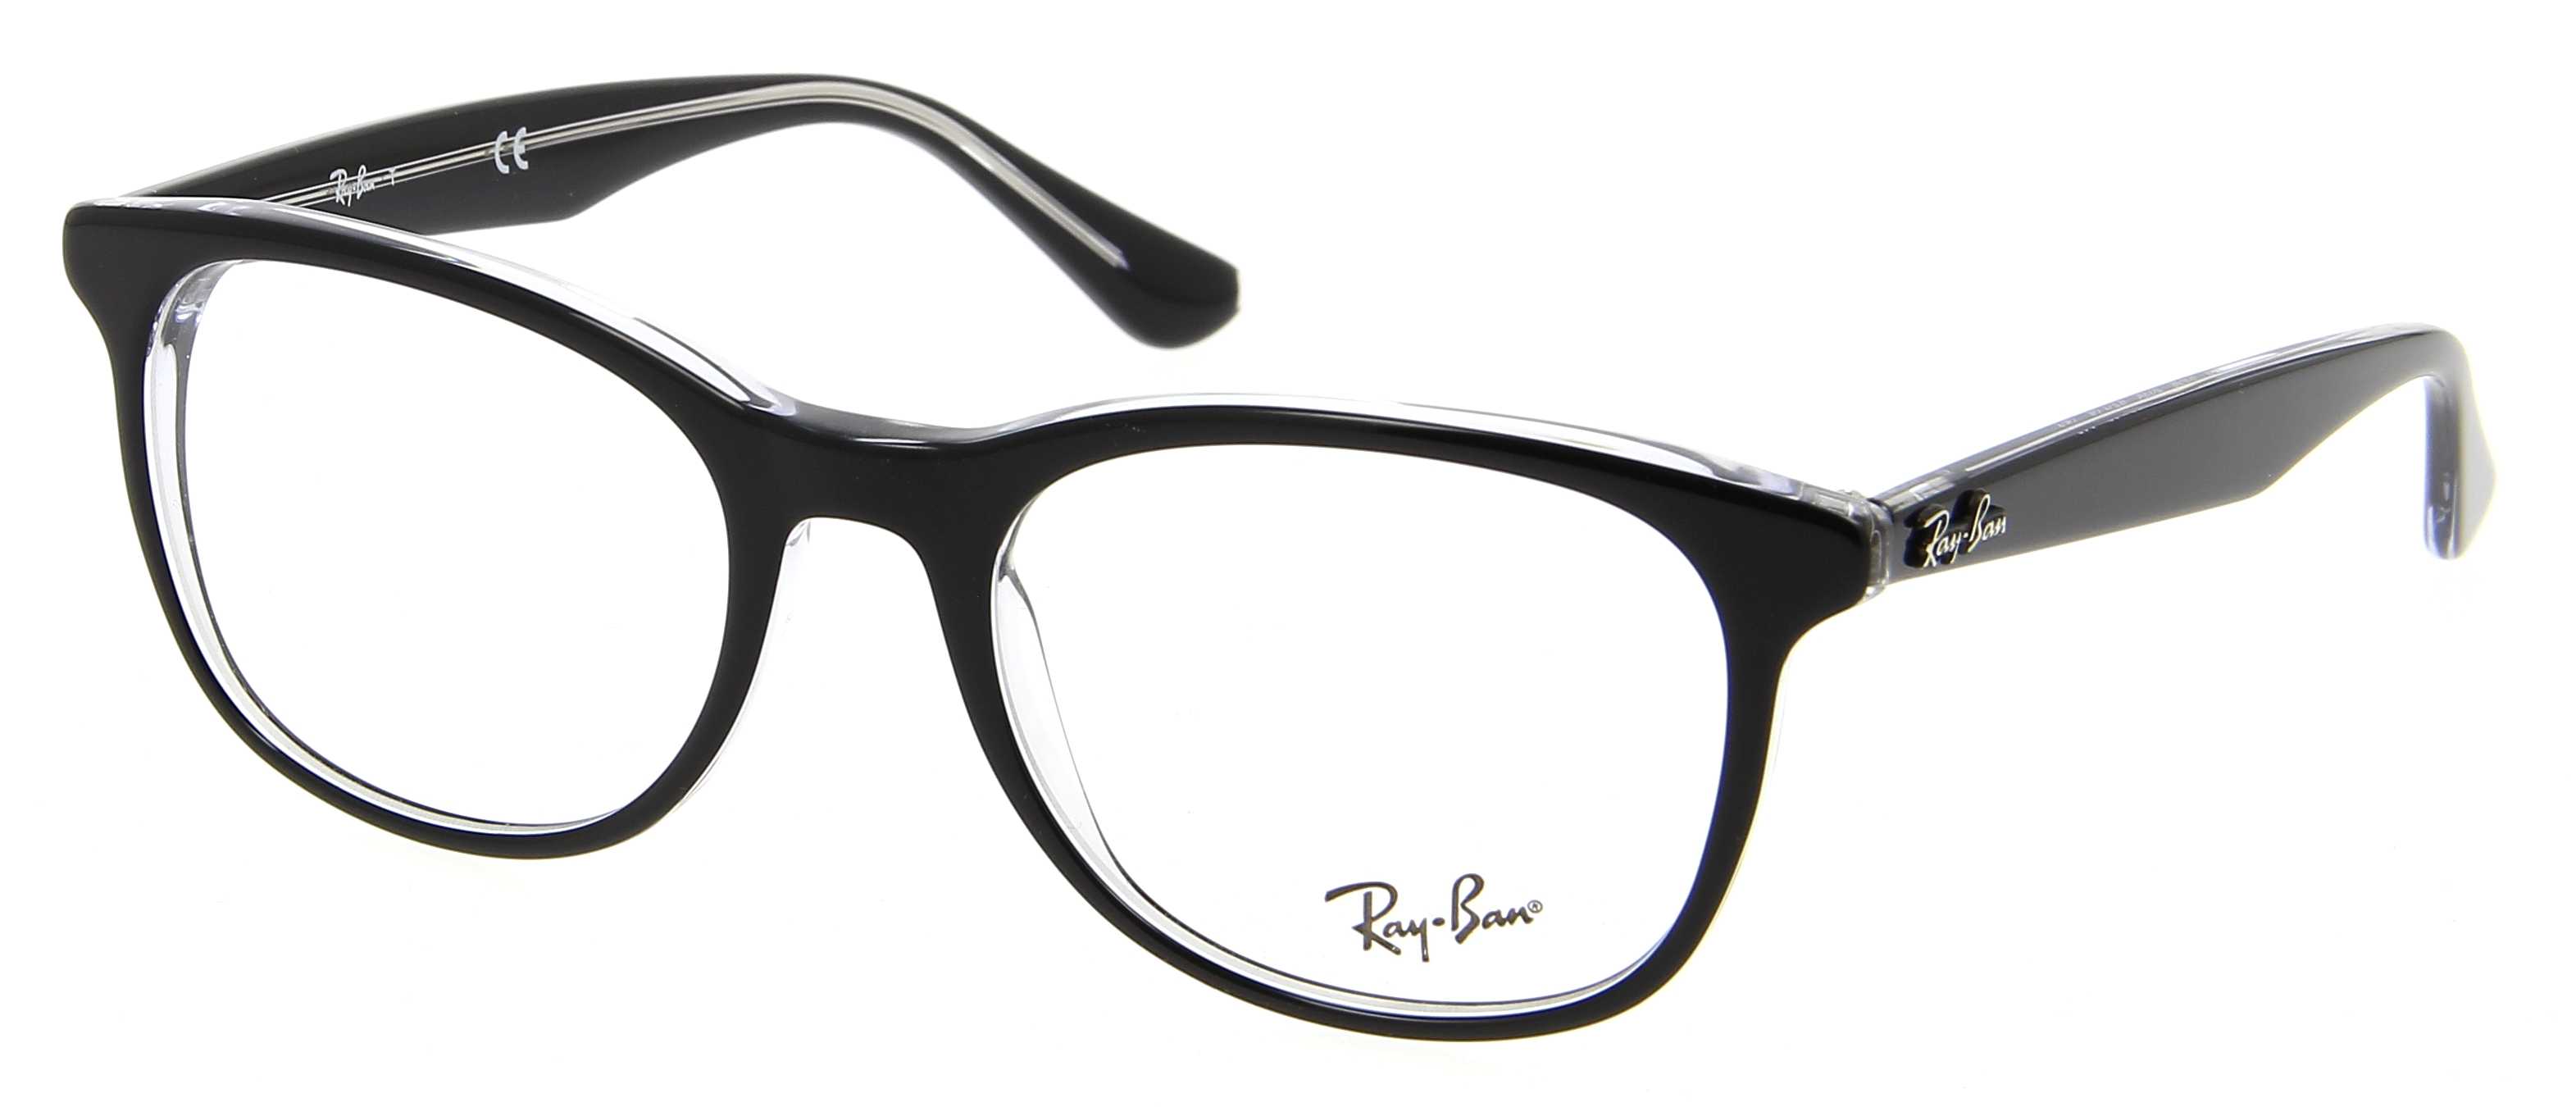 RAY-BAN RX 5356 2034 52/19 : Eyeglasses - Optical Center